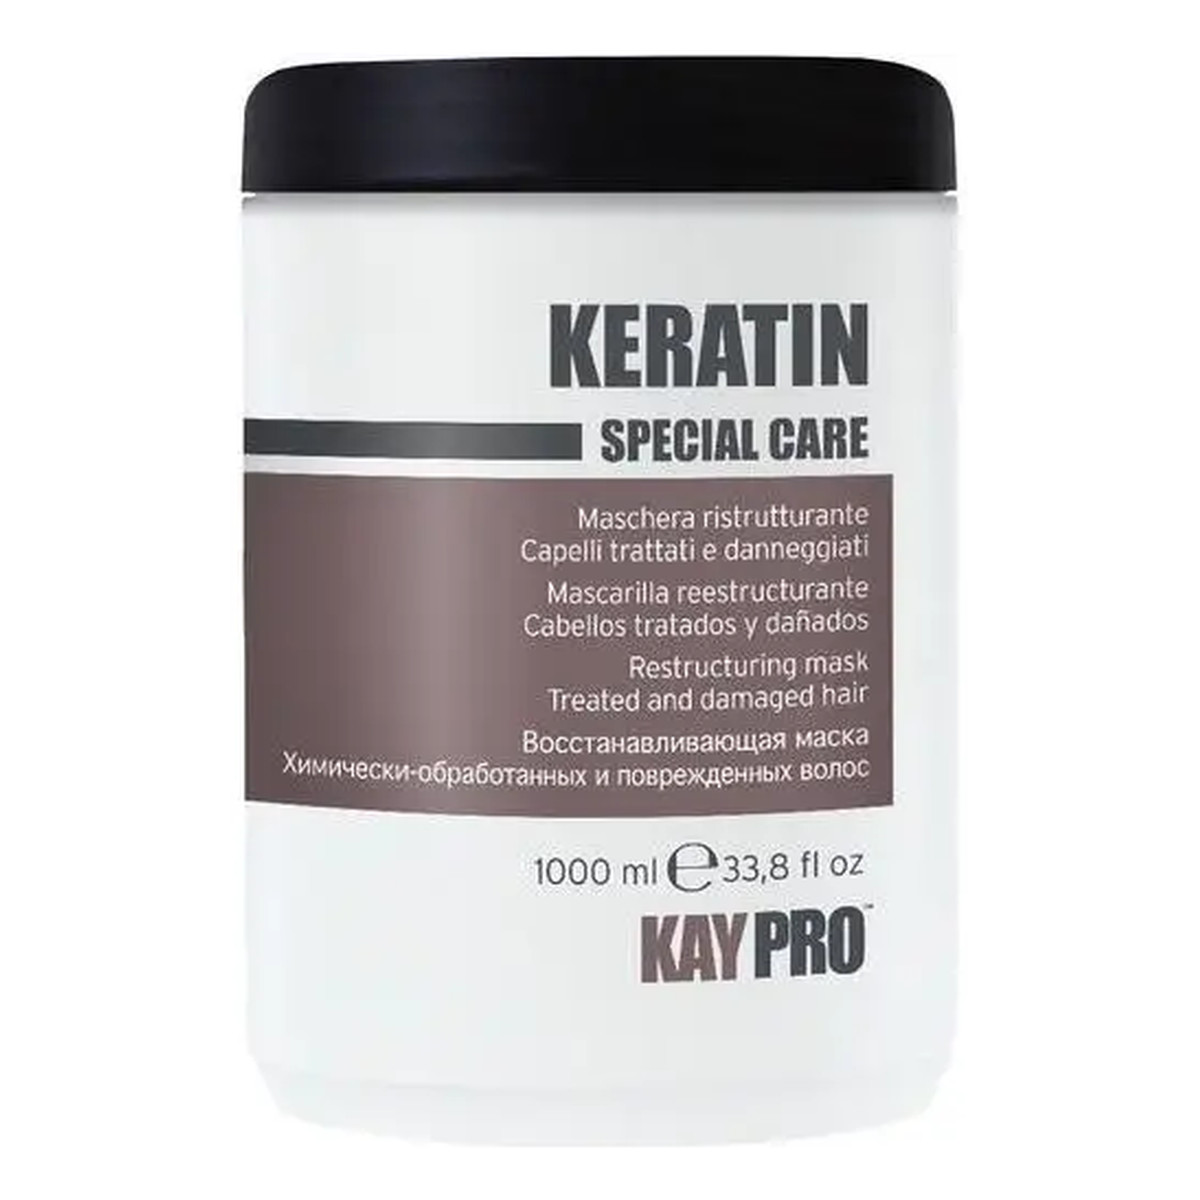 Kay-Pro Special Care Keratin Maska regenerująca 1000ml